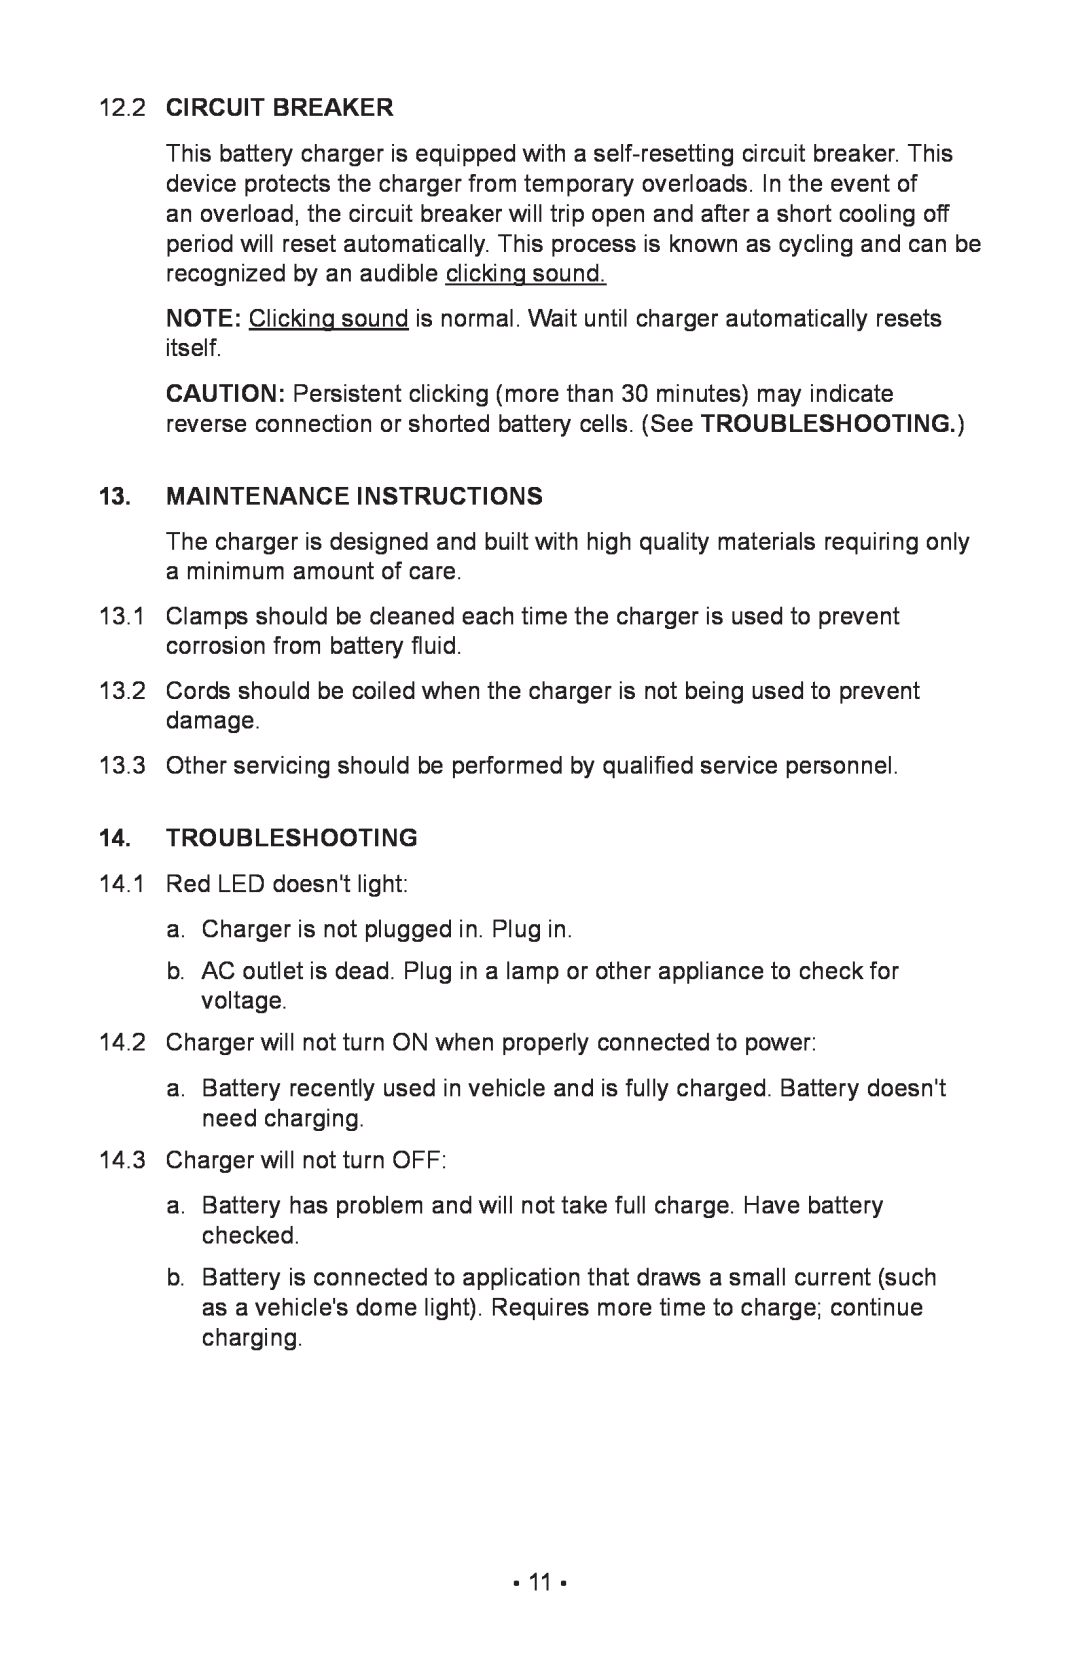 Schumacher 85-716 instruction manual Circuit Breaker, Maintenance Instructions, Troubleshooting 